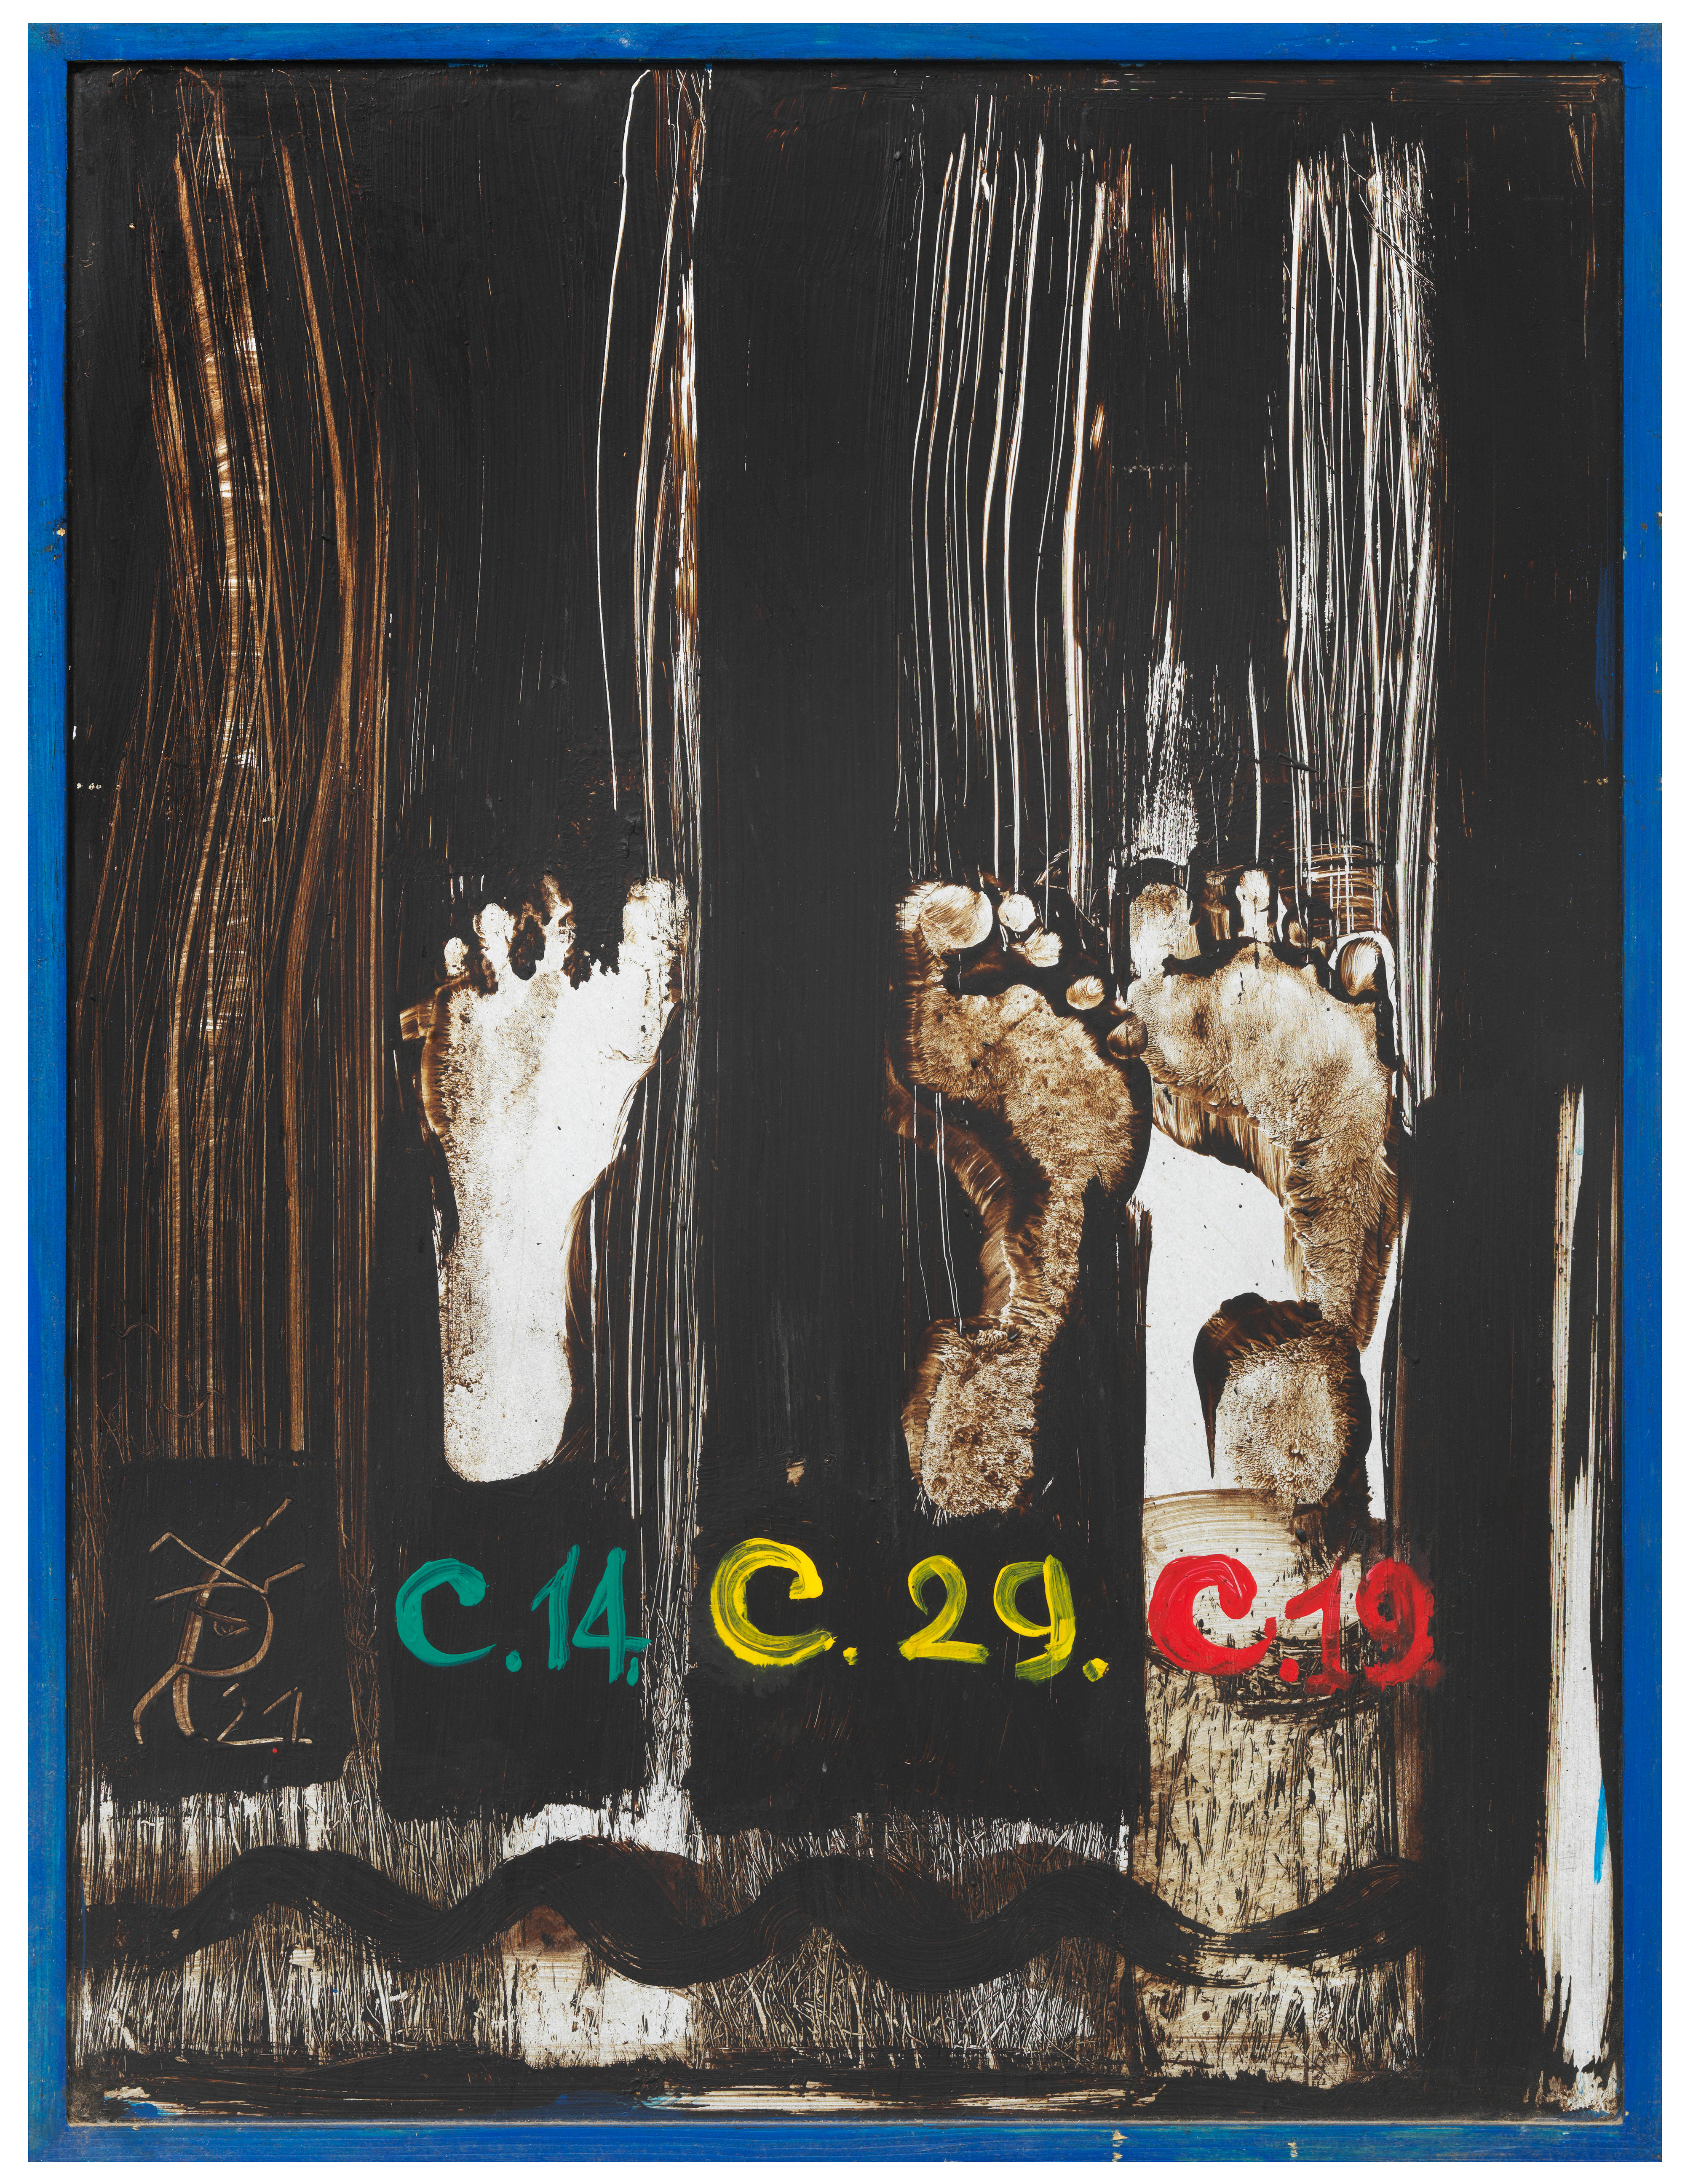 Galerie Barbara Thumm \ El Hadji Sy, C14 C29 C19, EHS-21-0001 \ C14 C29 C19, 2021 (2021)